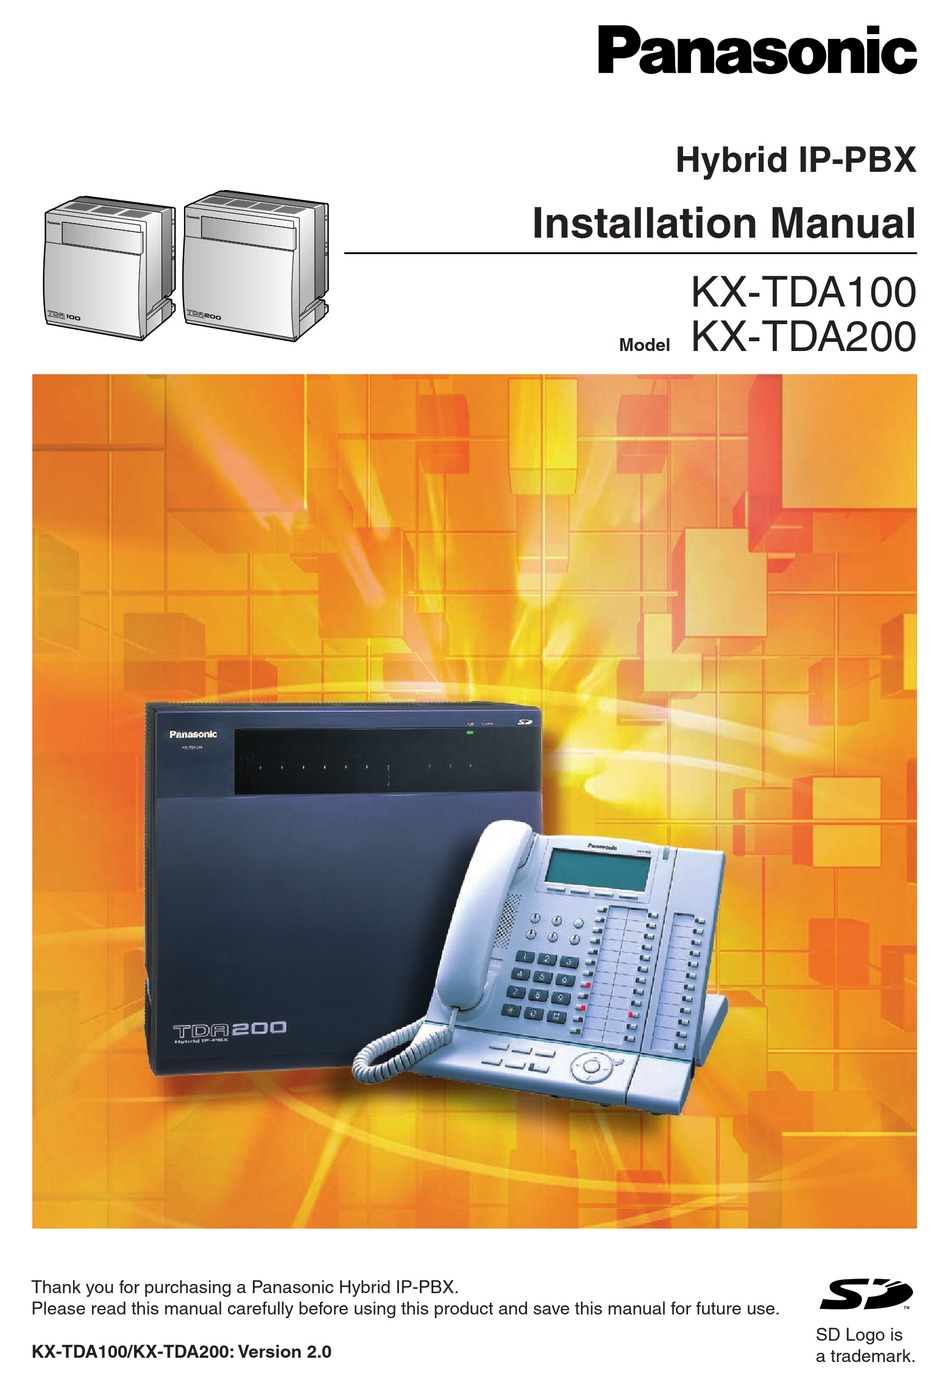 Cable Management for PBX Panasonic TDA100/TDE100 PSKR1001 